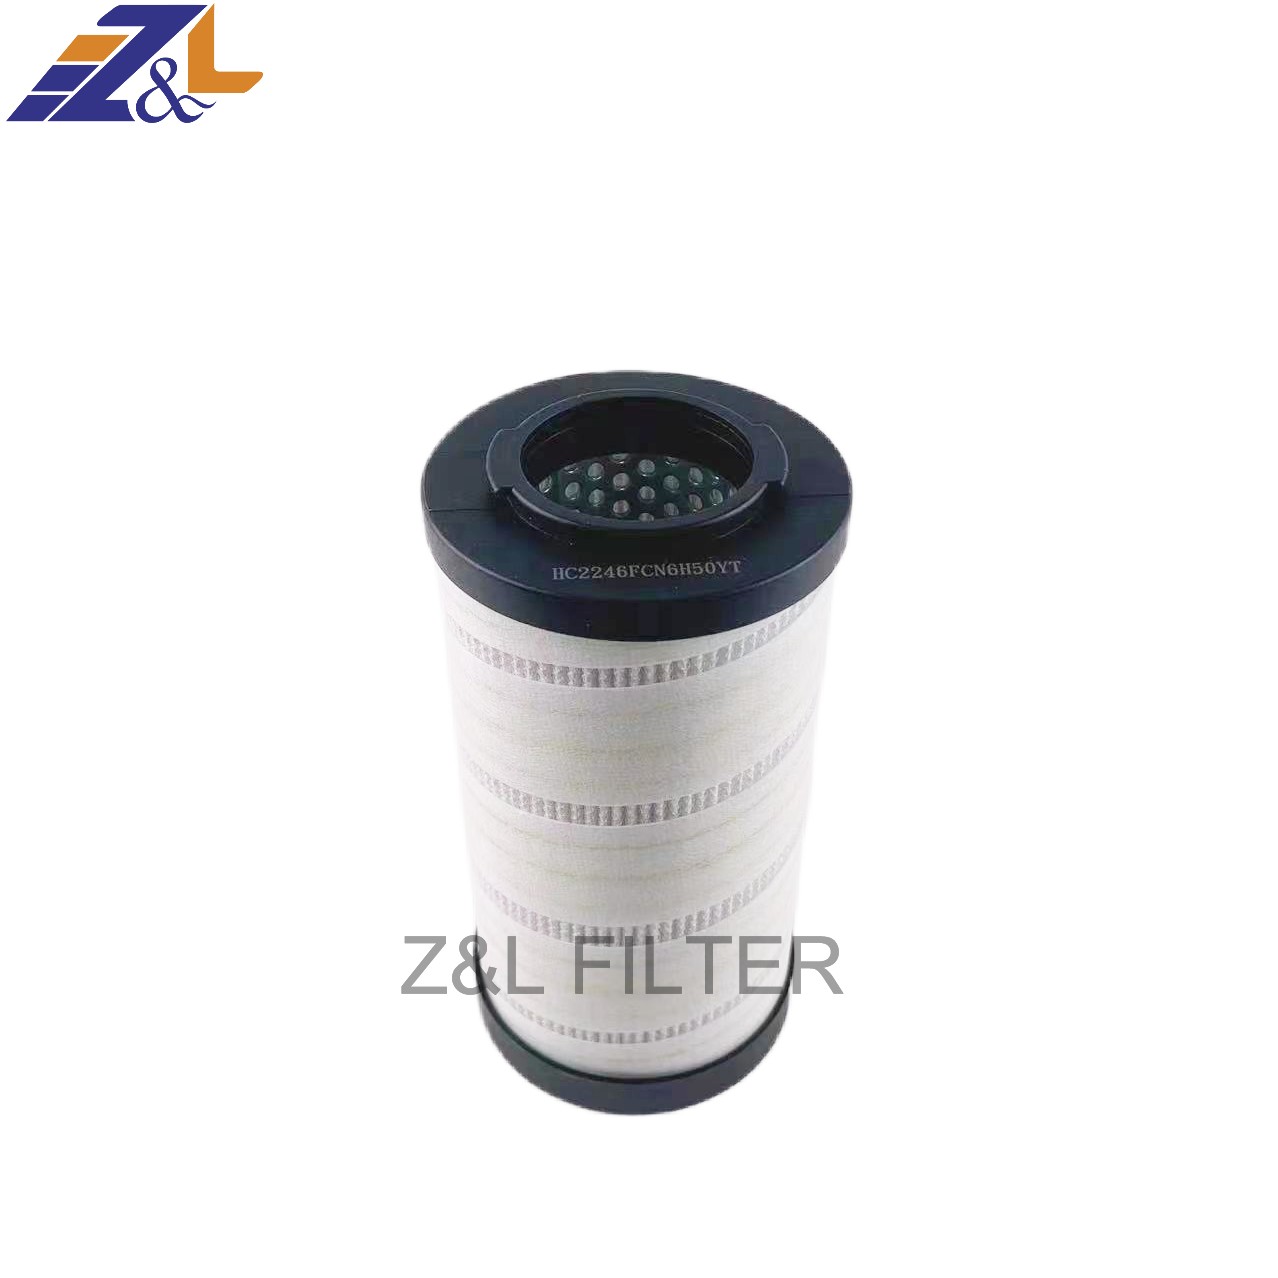 Z&L high efficiency oil filter element for forwarder,harvester,forestry equipment,loader,feller buncher,hc2206series, hc2206fds8h